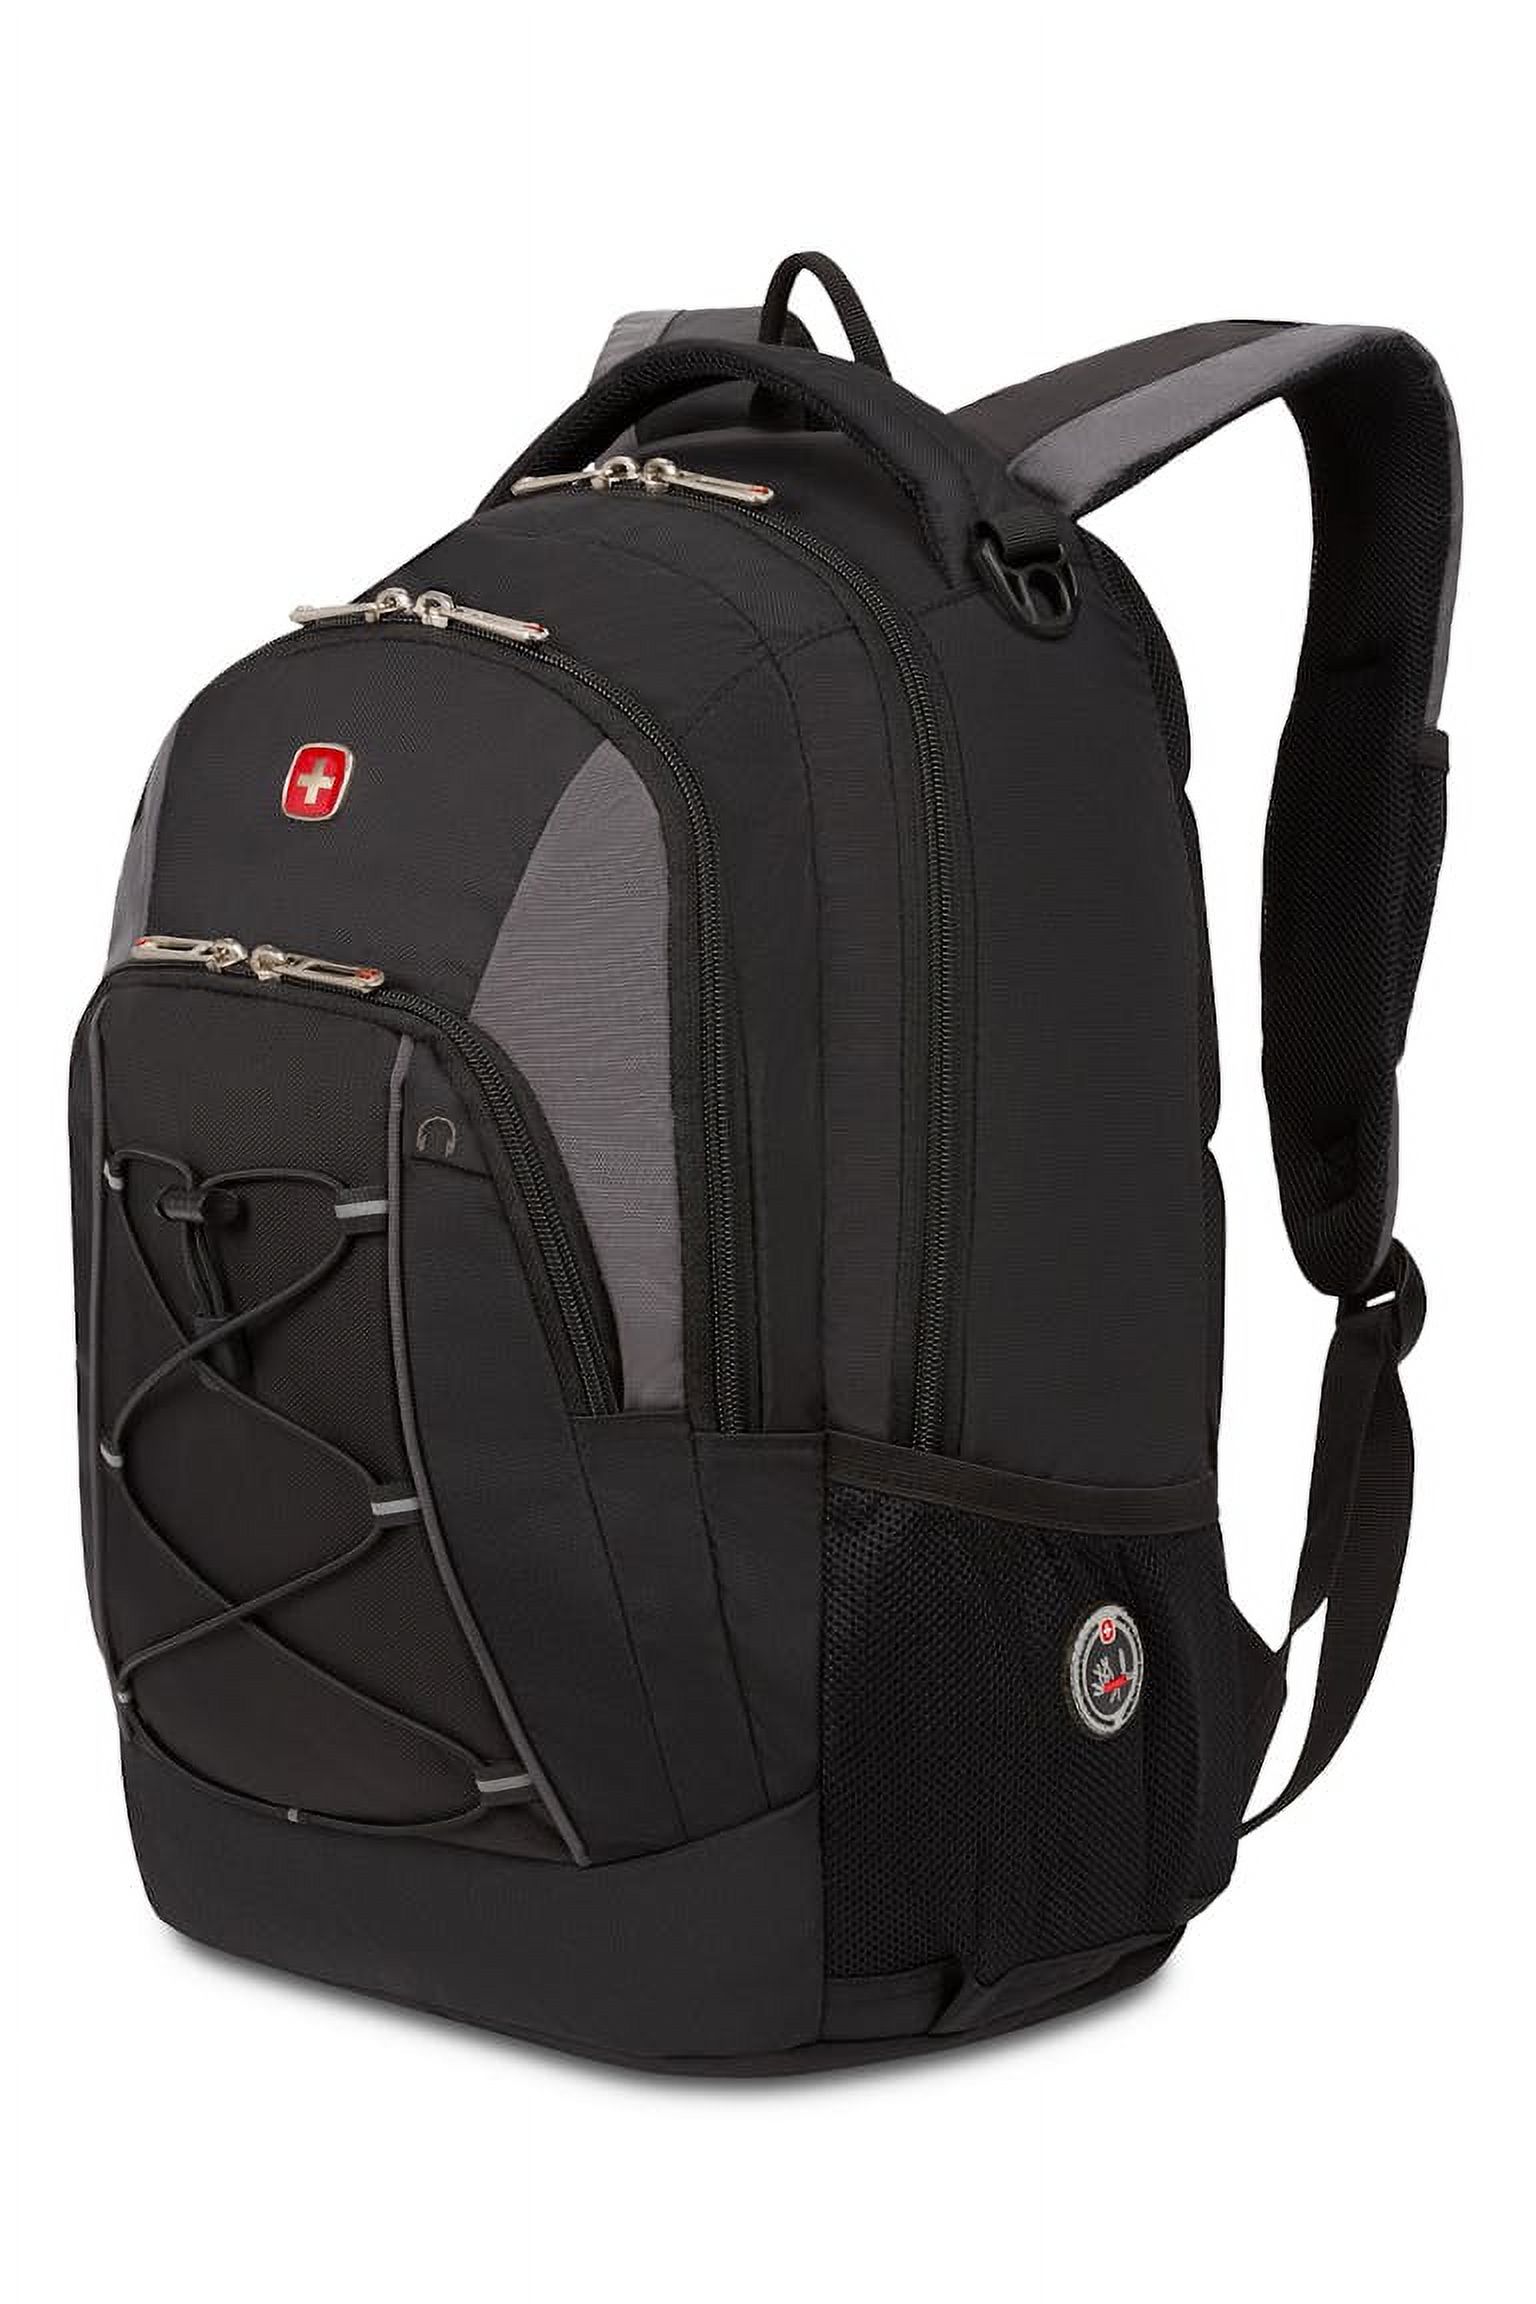 Swissgear 1186 backpack - image 1 of 4